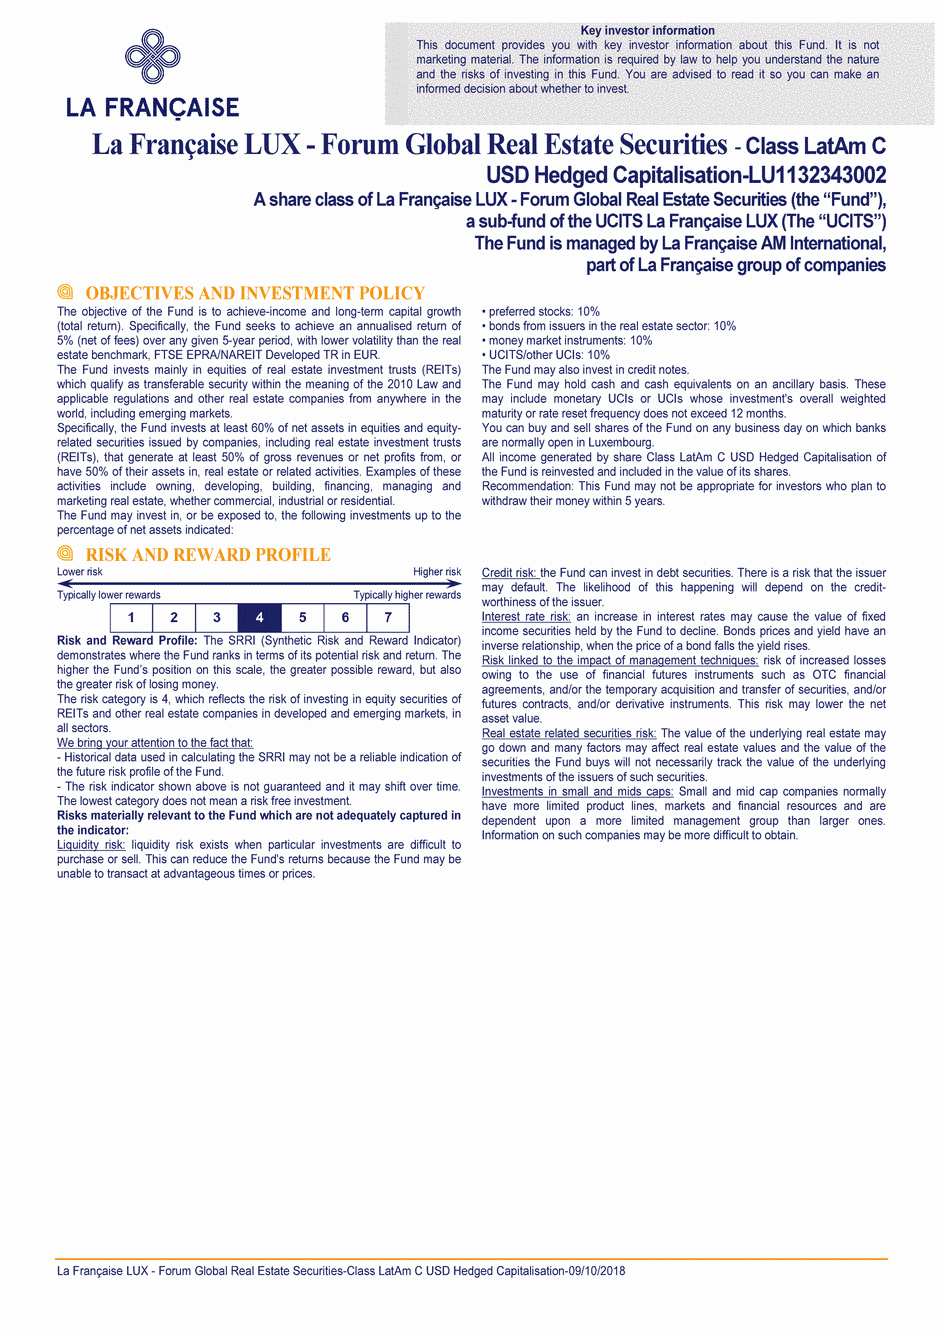 DICI La Française LUX - Forum Global Real Estate Securities - LatAm C (C) USD H - 09/10/2018 - Anglais